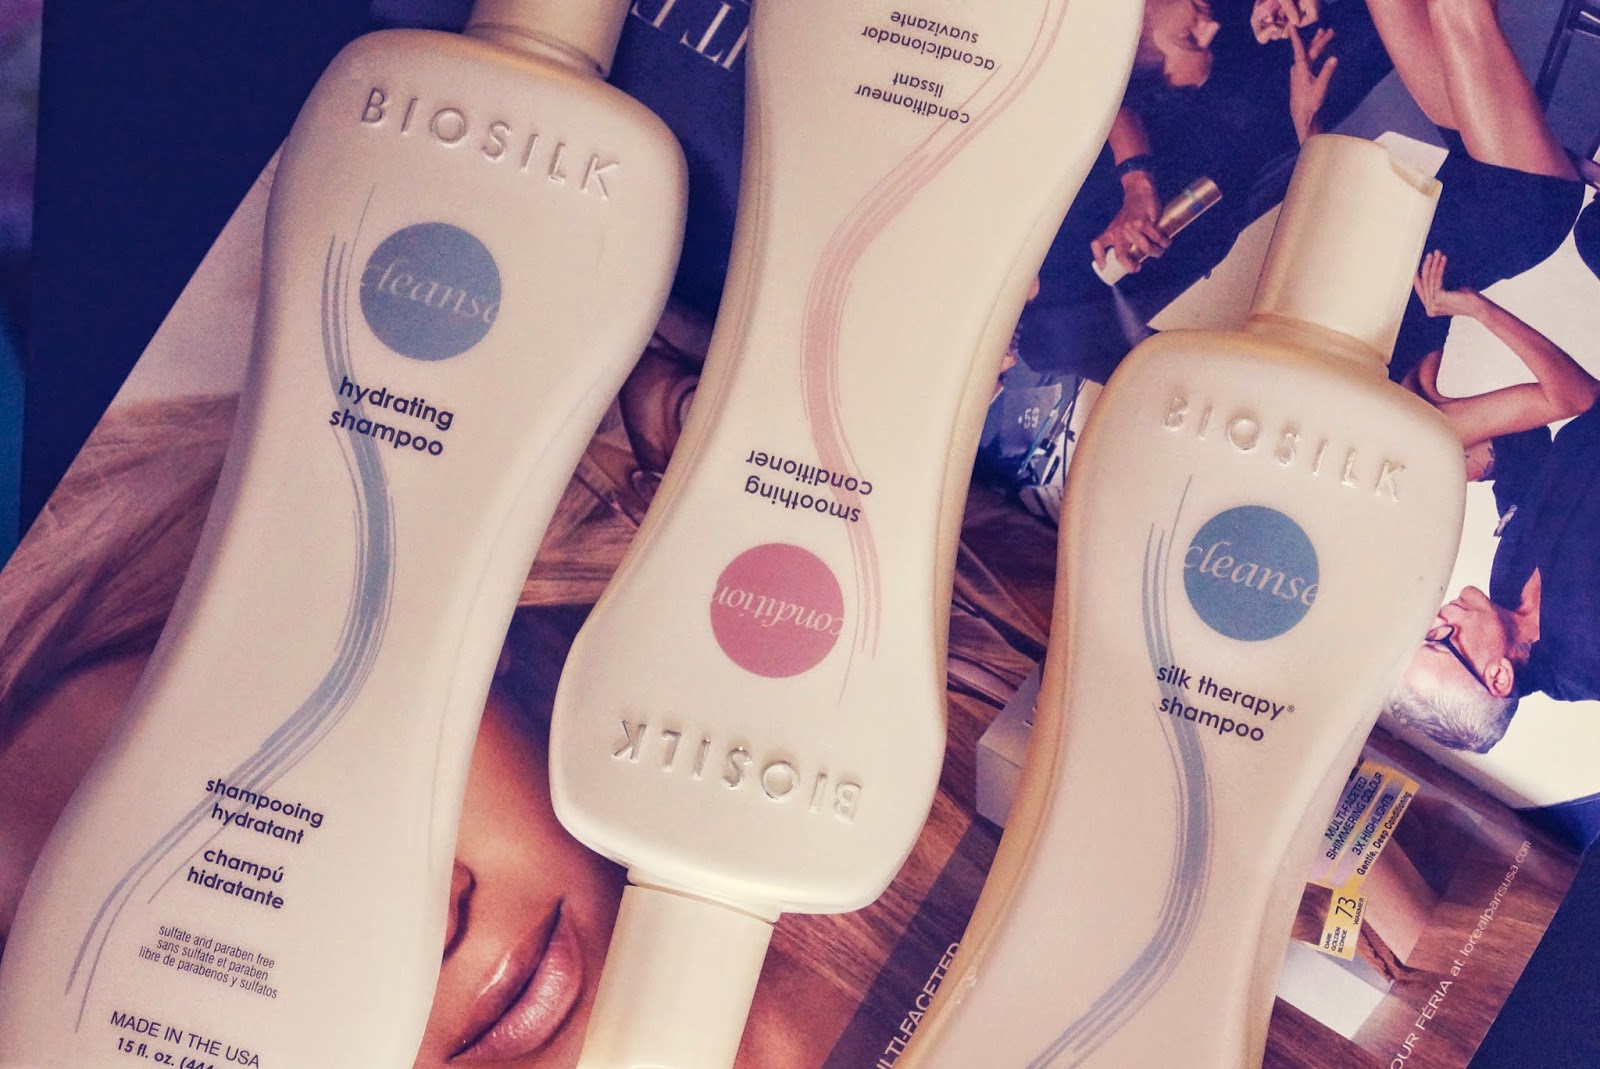 BIOSILK Hydrating Therapy Shampoo - wide 3